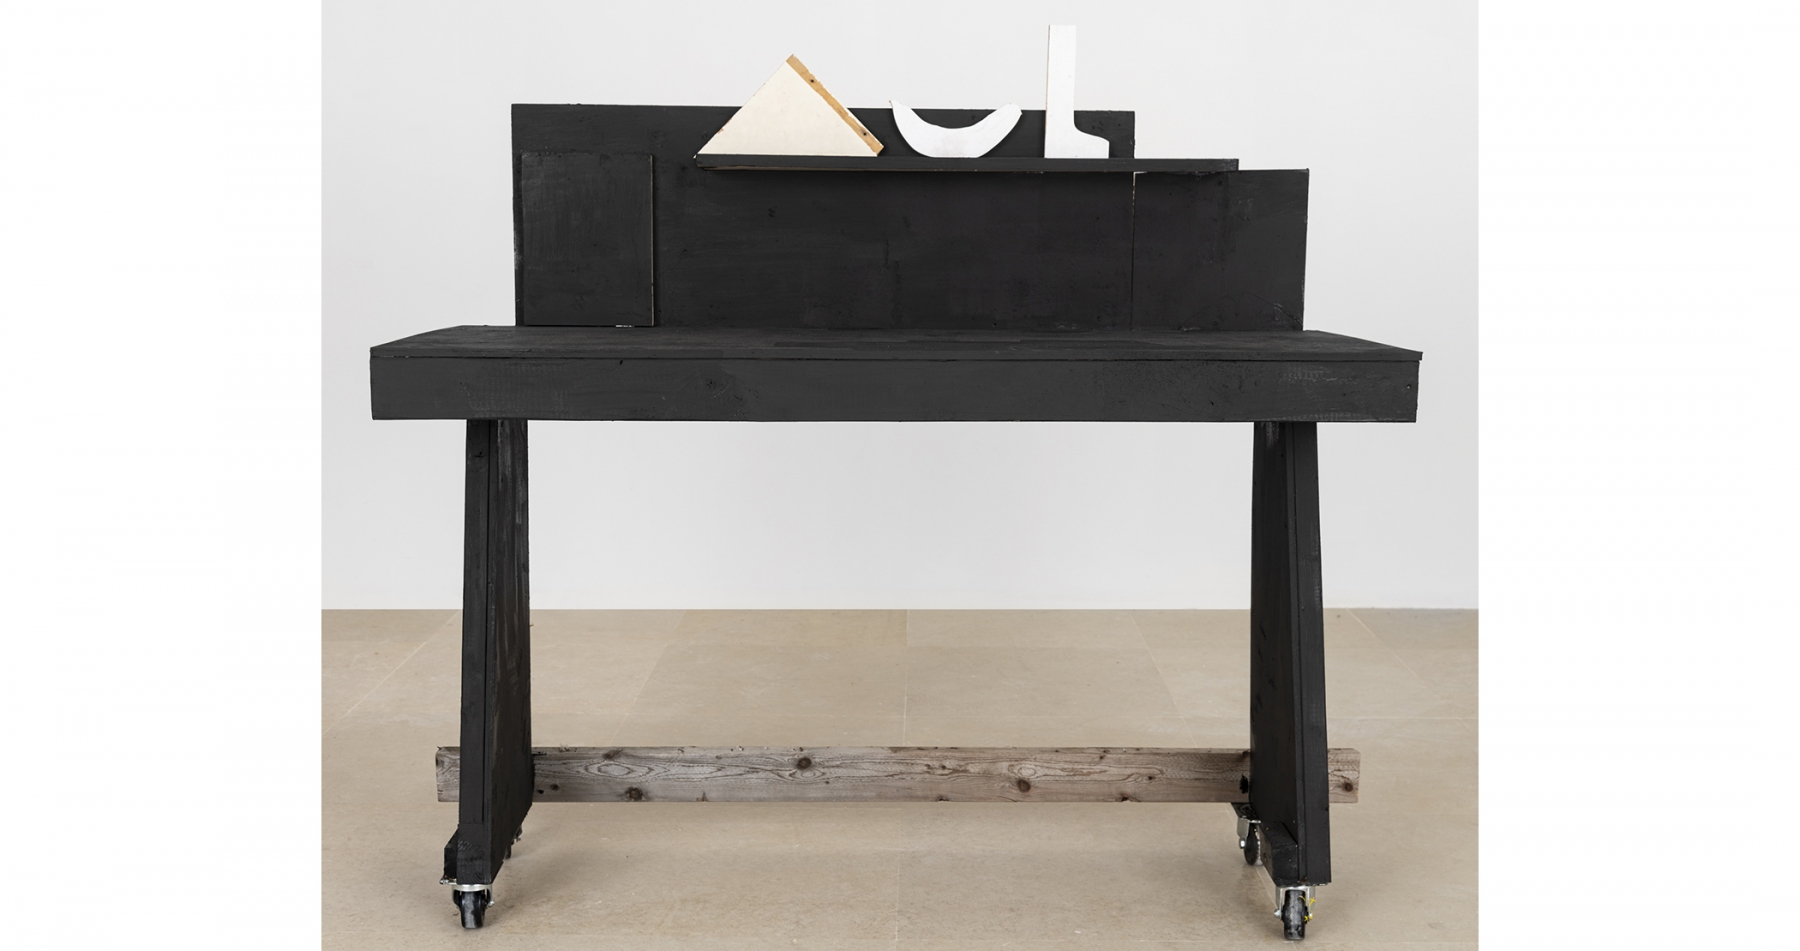 Gedi Sibony

Overarcher, 2020

Salvaged wood, paint, metal screws, casters

56 x 62 x 23 1/2 inches (142.2 x 157.5 x 59.7 cm)